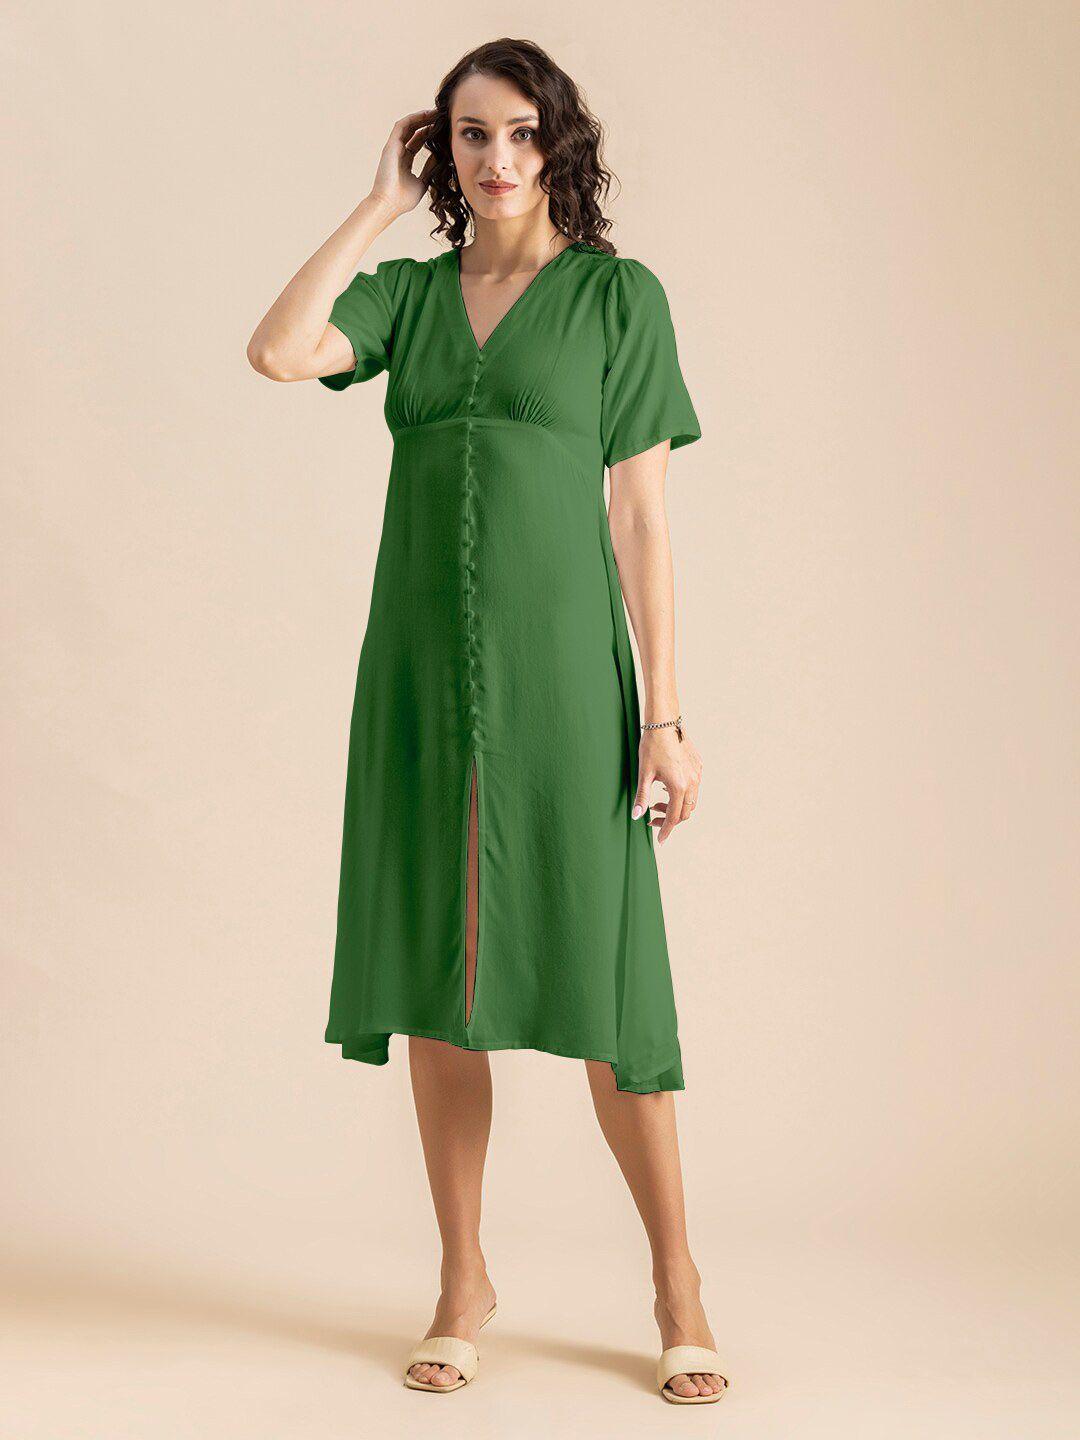 moomaya green a-line dress